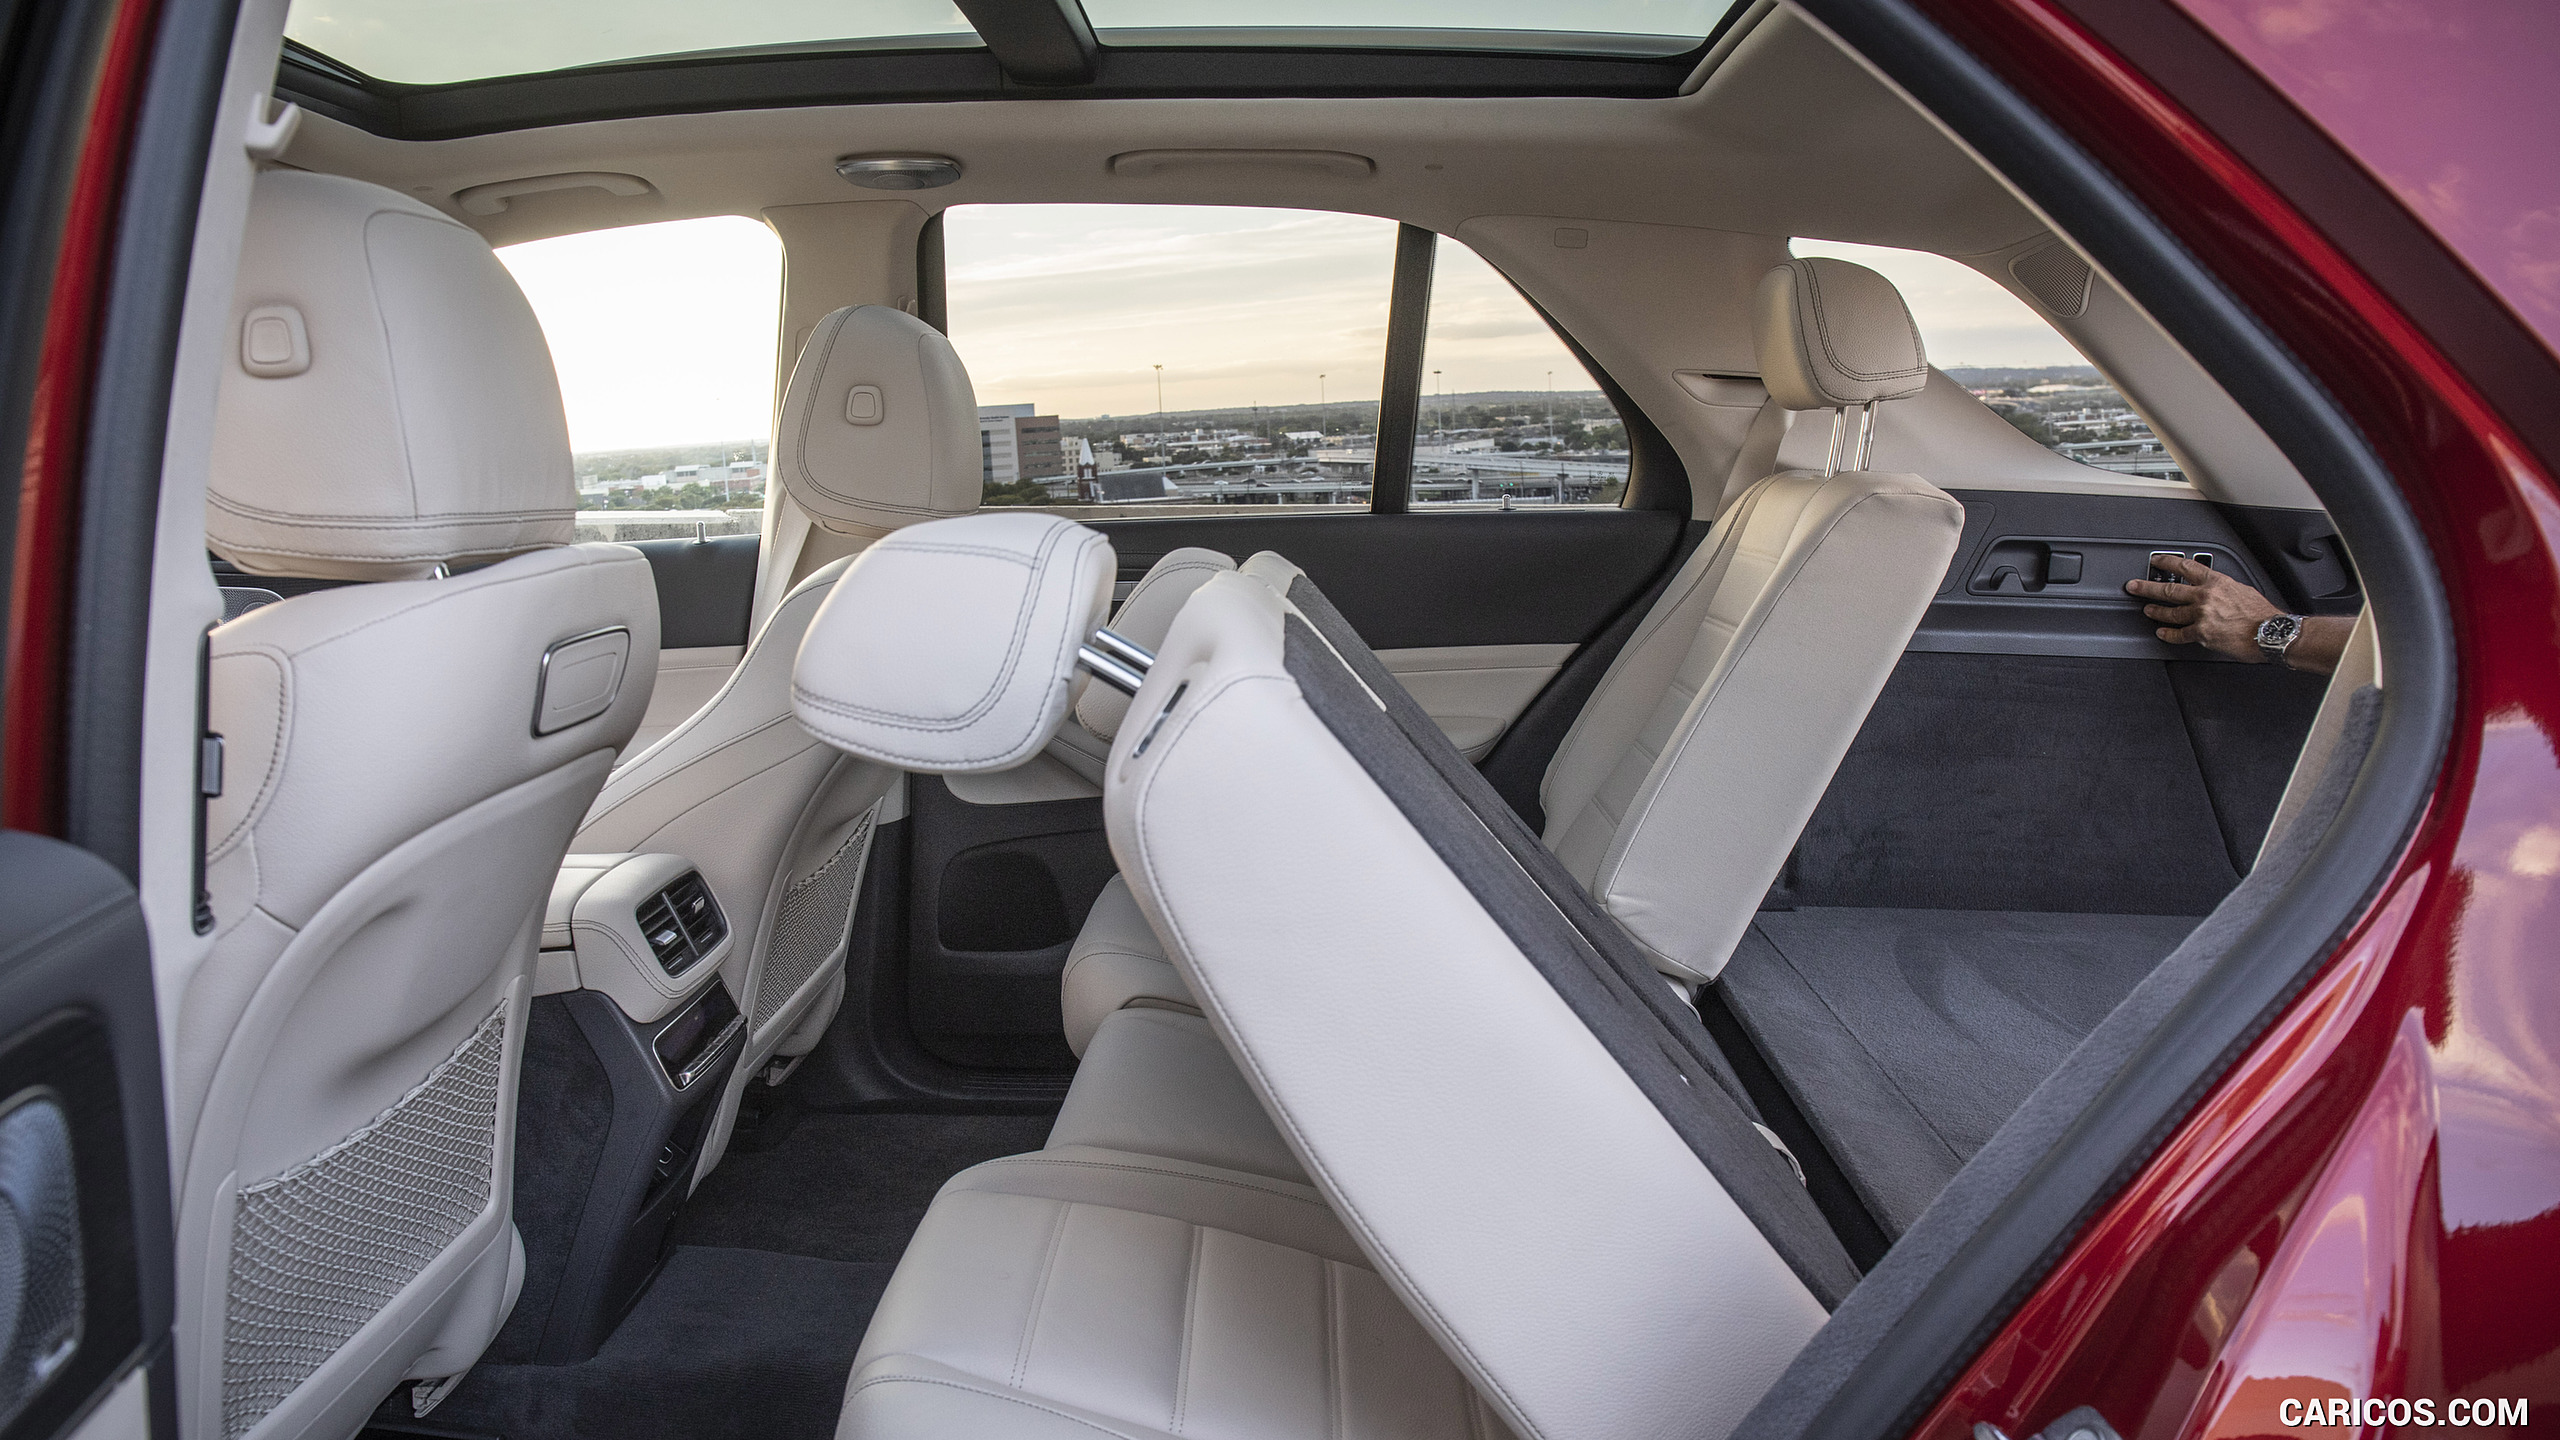 2020 Mercedes-Benz GLE 450 4MATIC (Color: Designo Hyazinth Red Metallic; US-Spec) - Interior, Rear Seats, #333 of 358